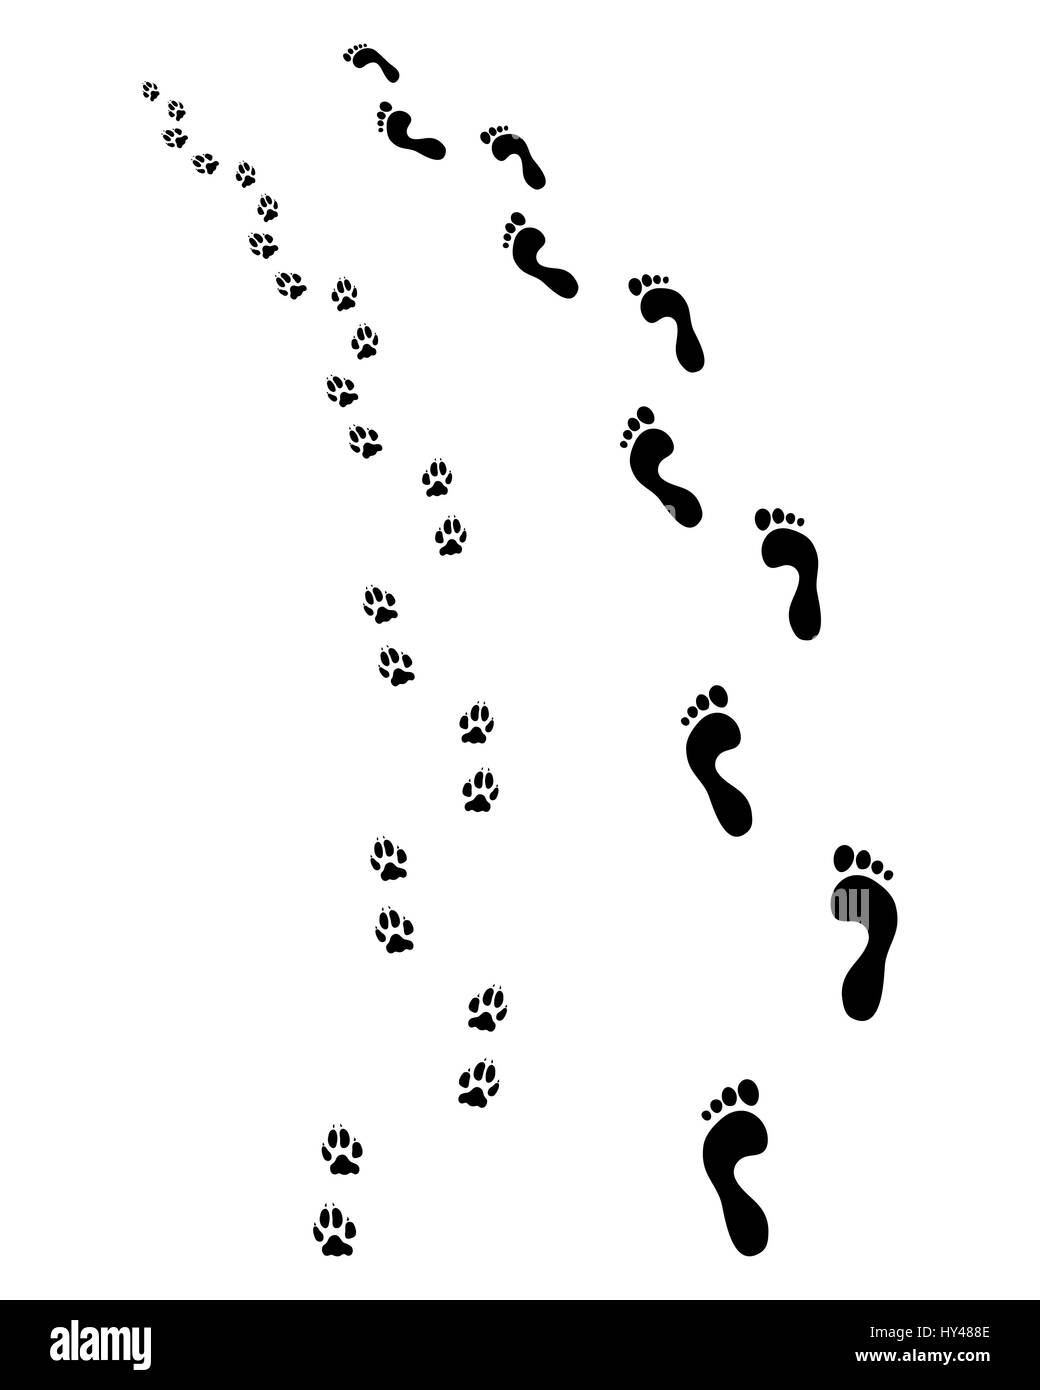 Stampe di piedi umani e zampe di cane, girare a sinistra Foto Stock